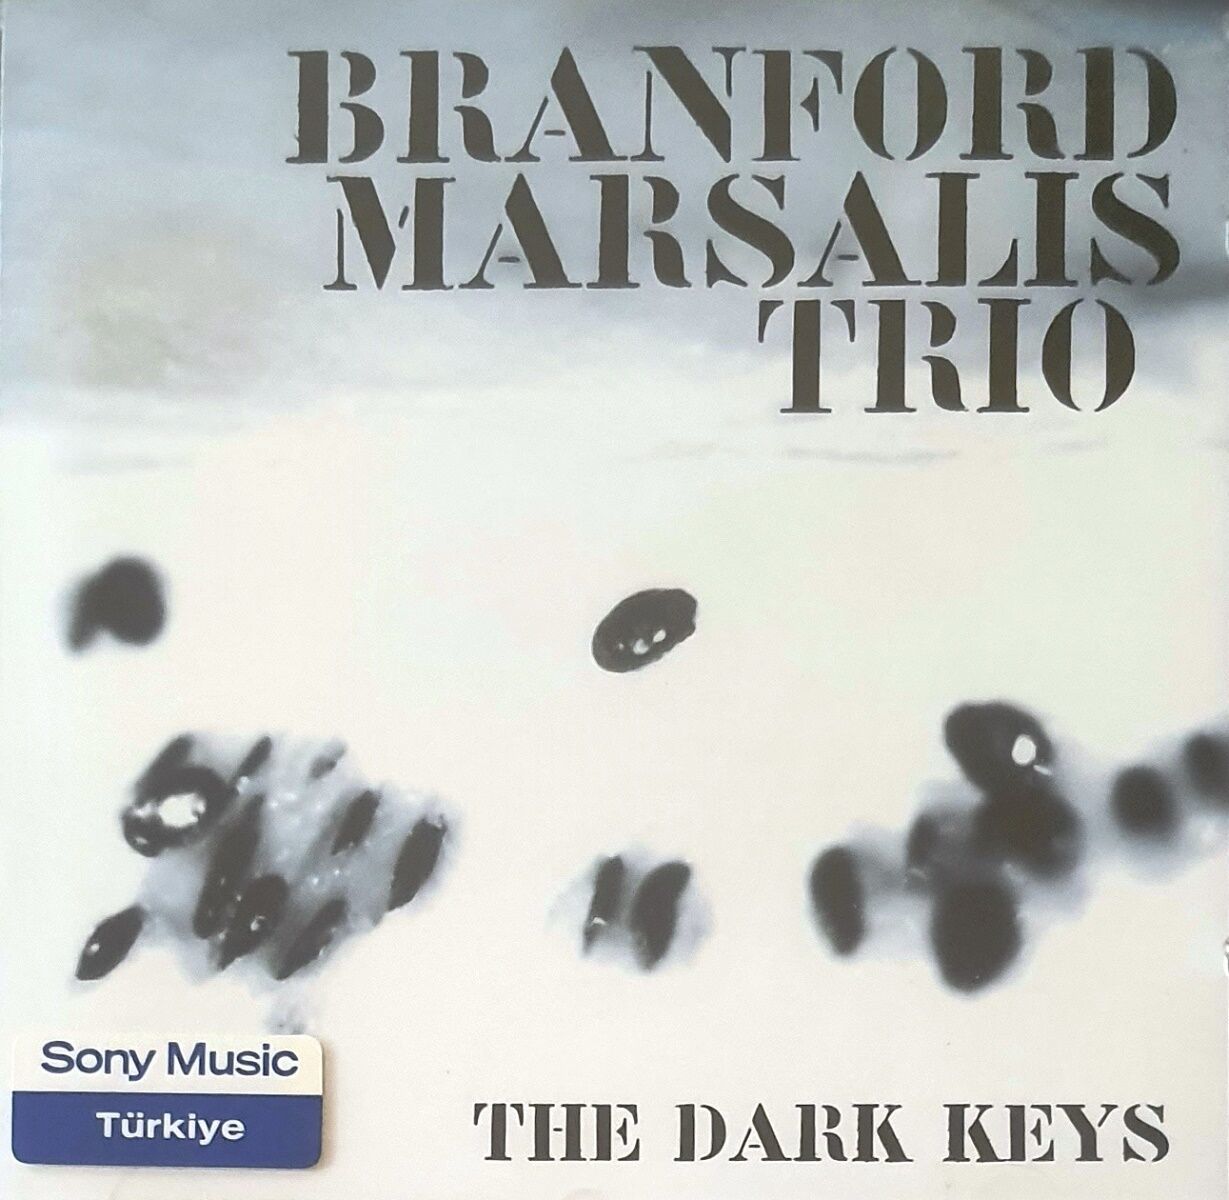 BRANFORD MARSALIS TRIO - THE DARK KEYS (CD) (1996)